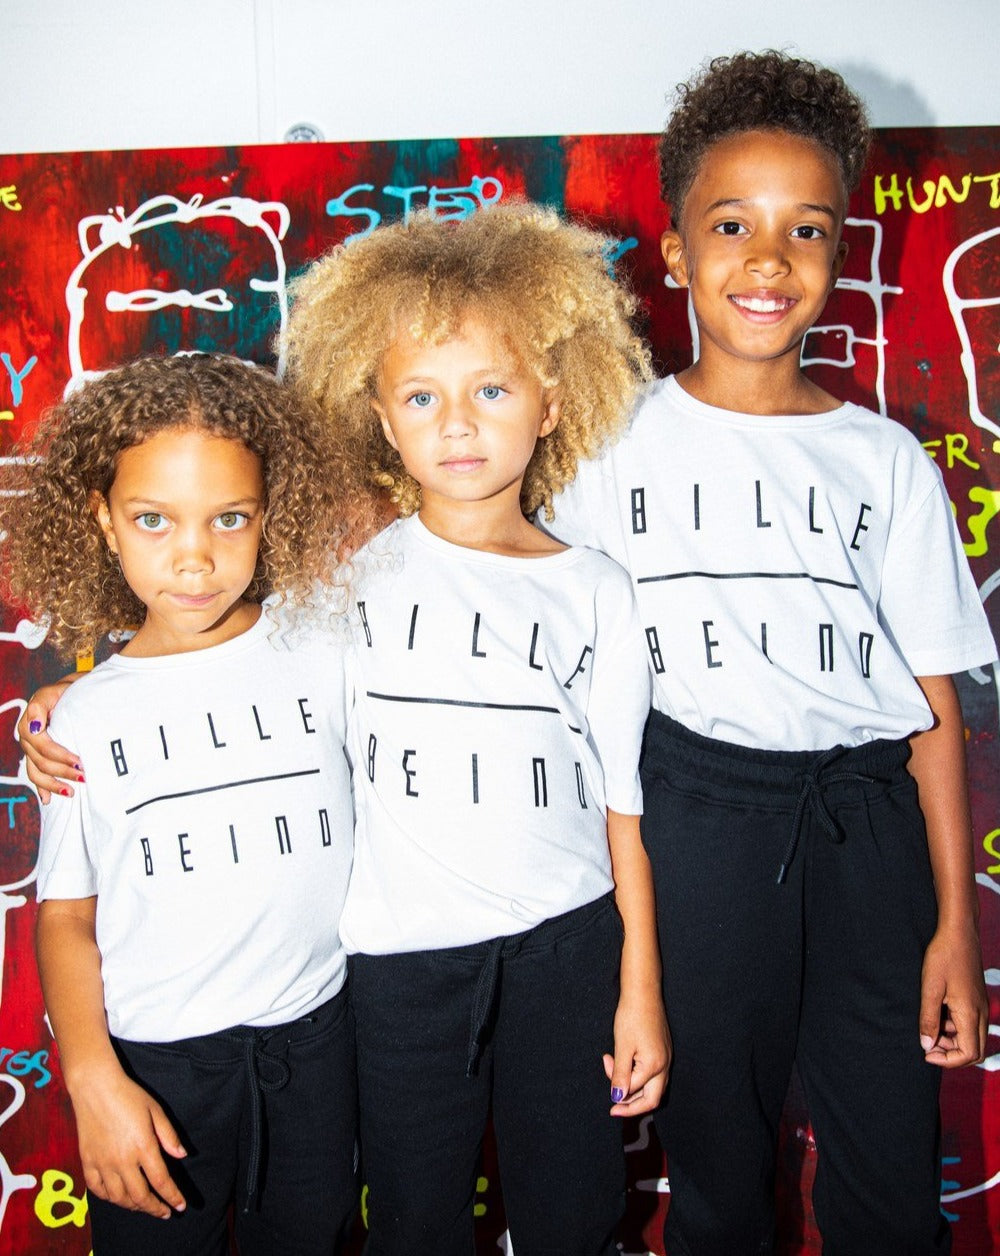 Kids Billebeino T-shirt